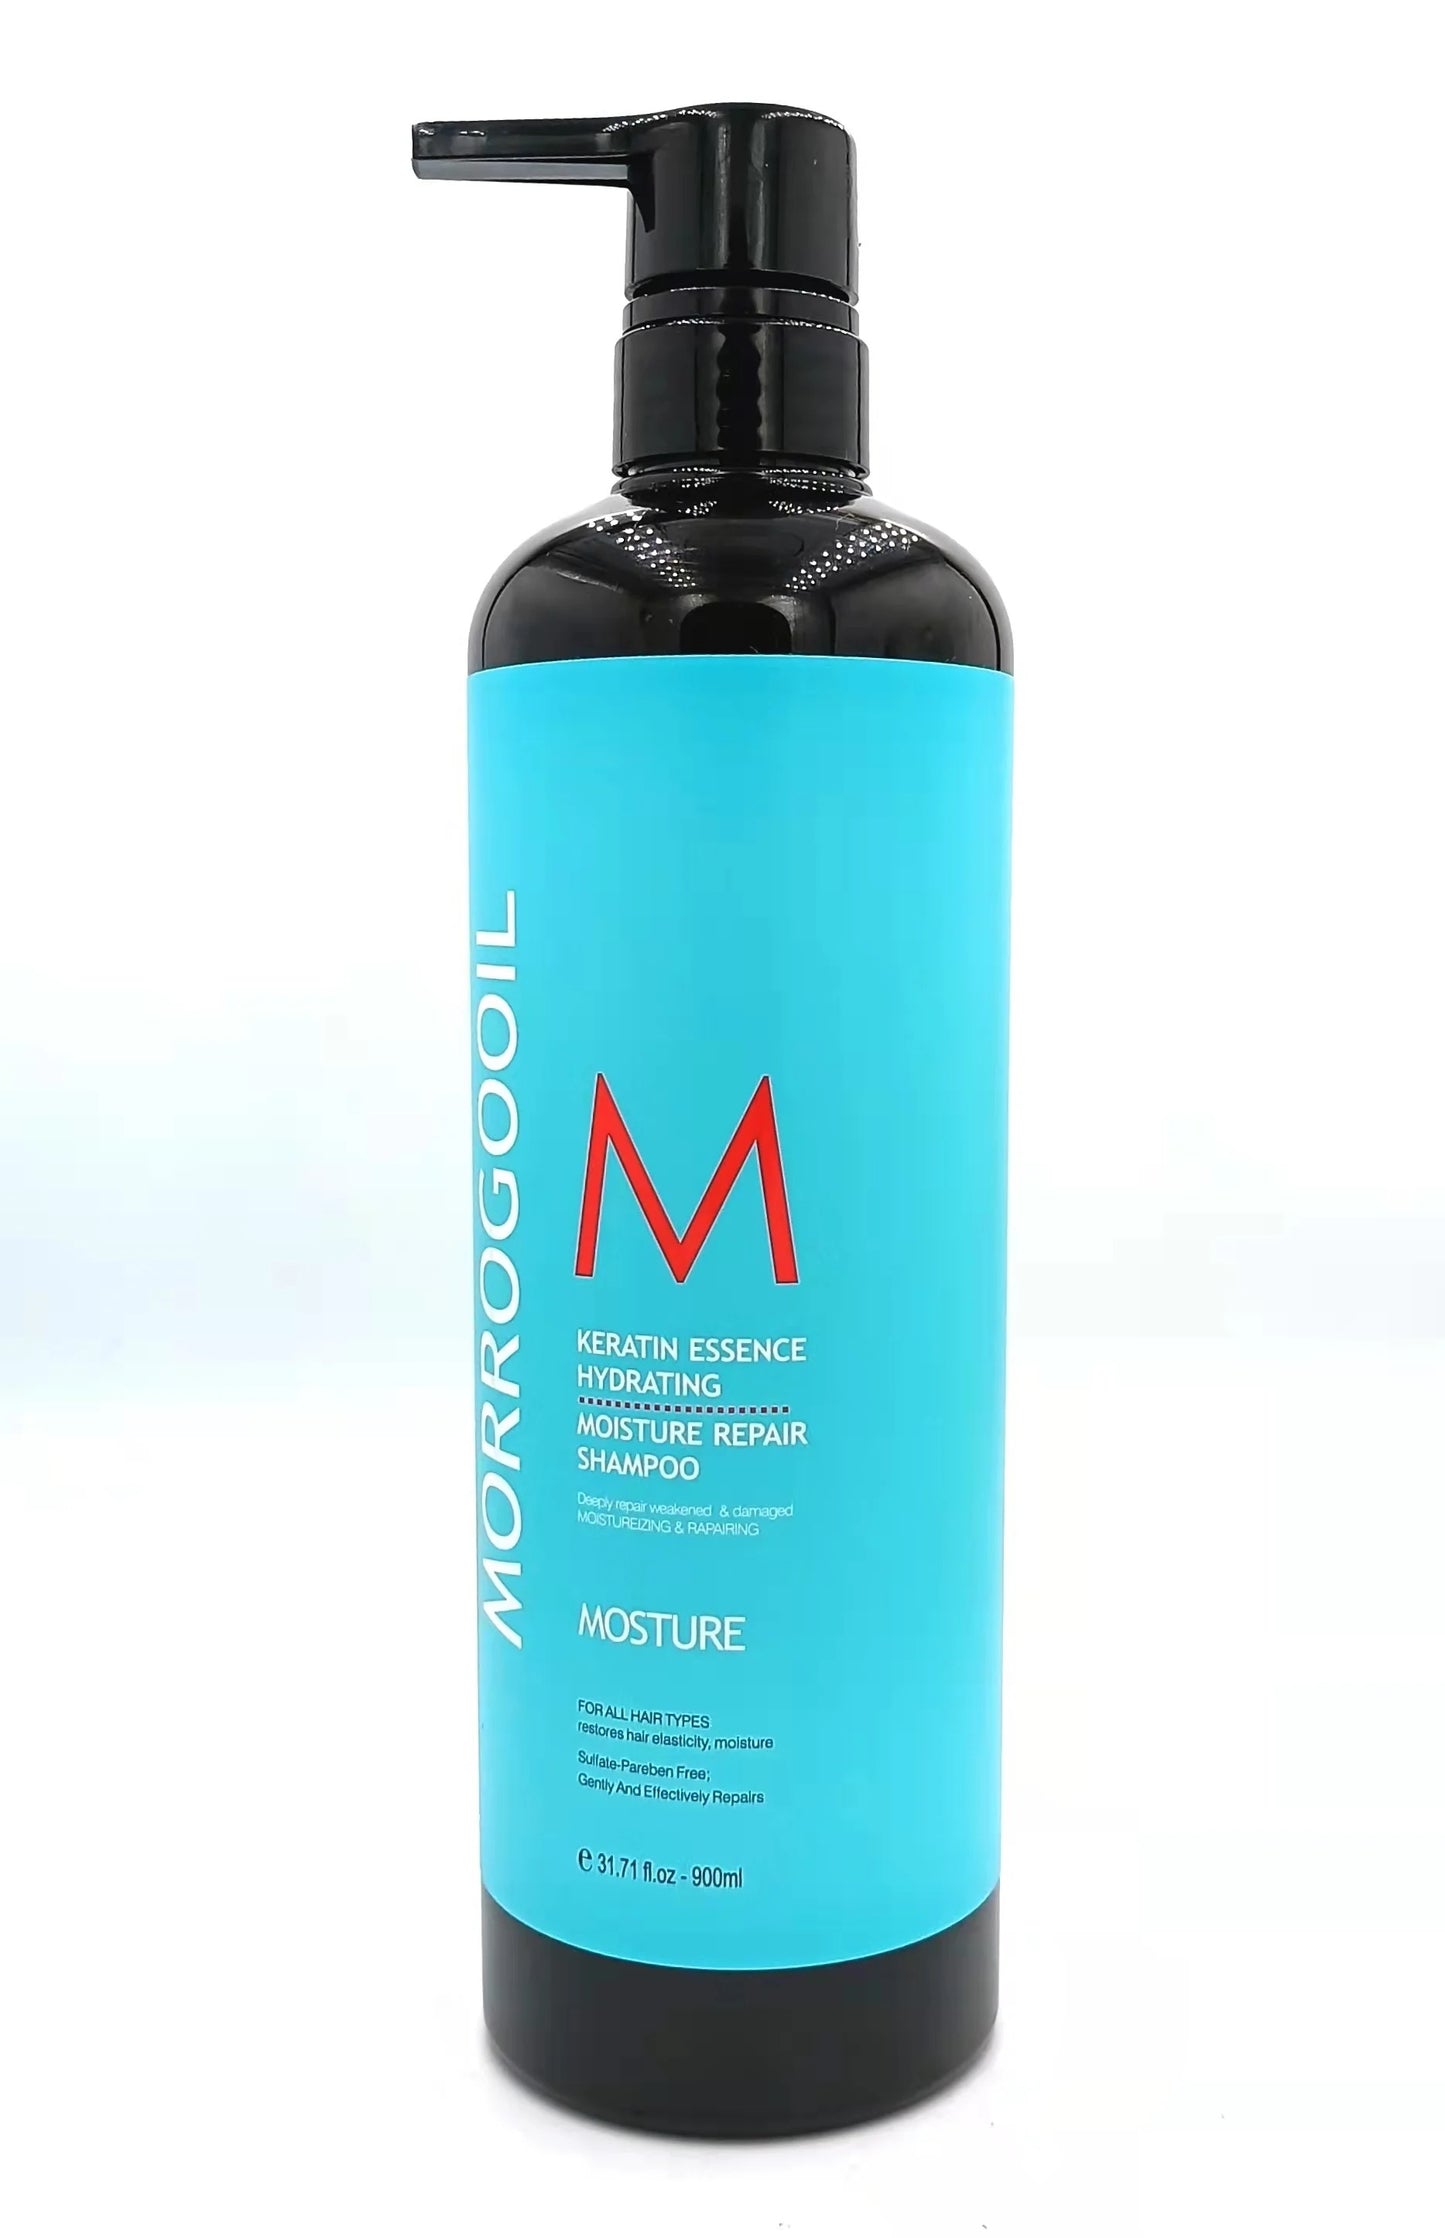 Morrogooil Conditioner & Shampoo